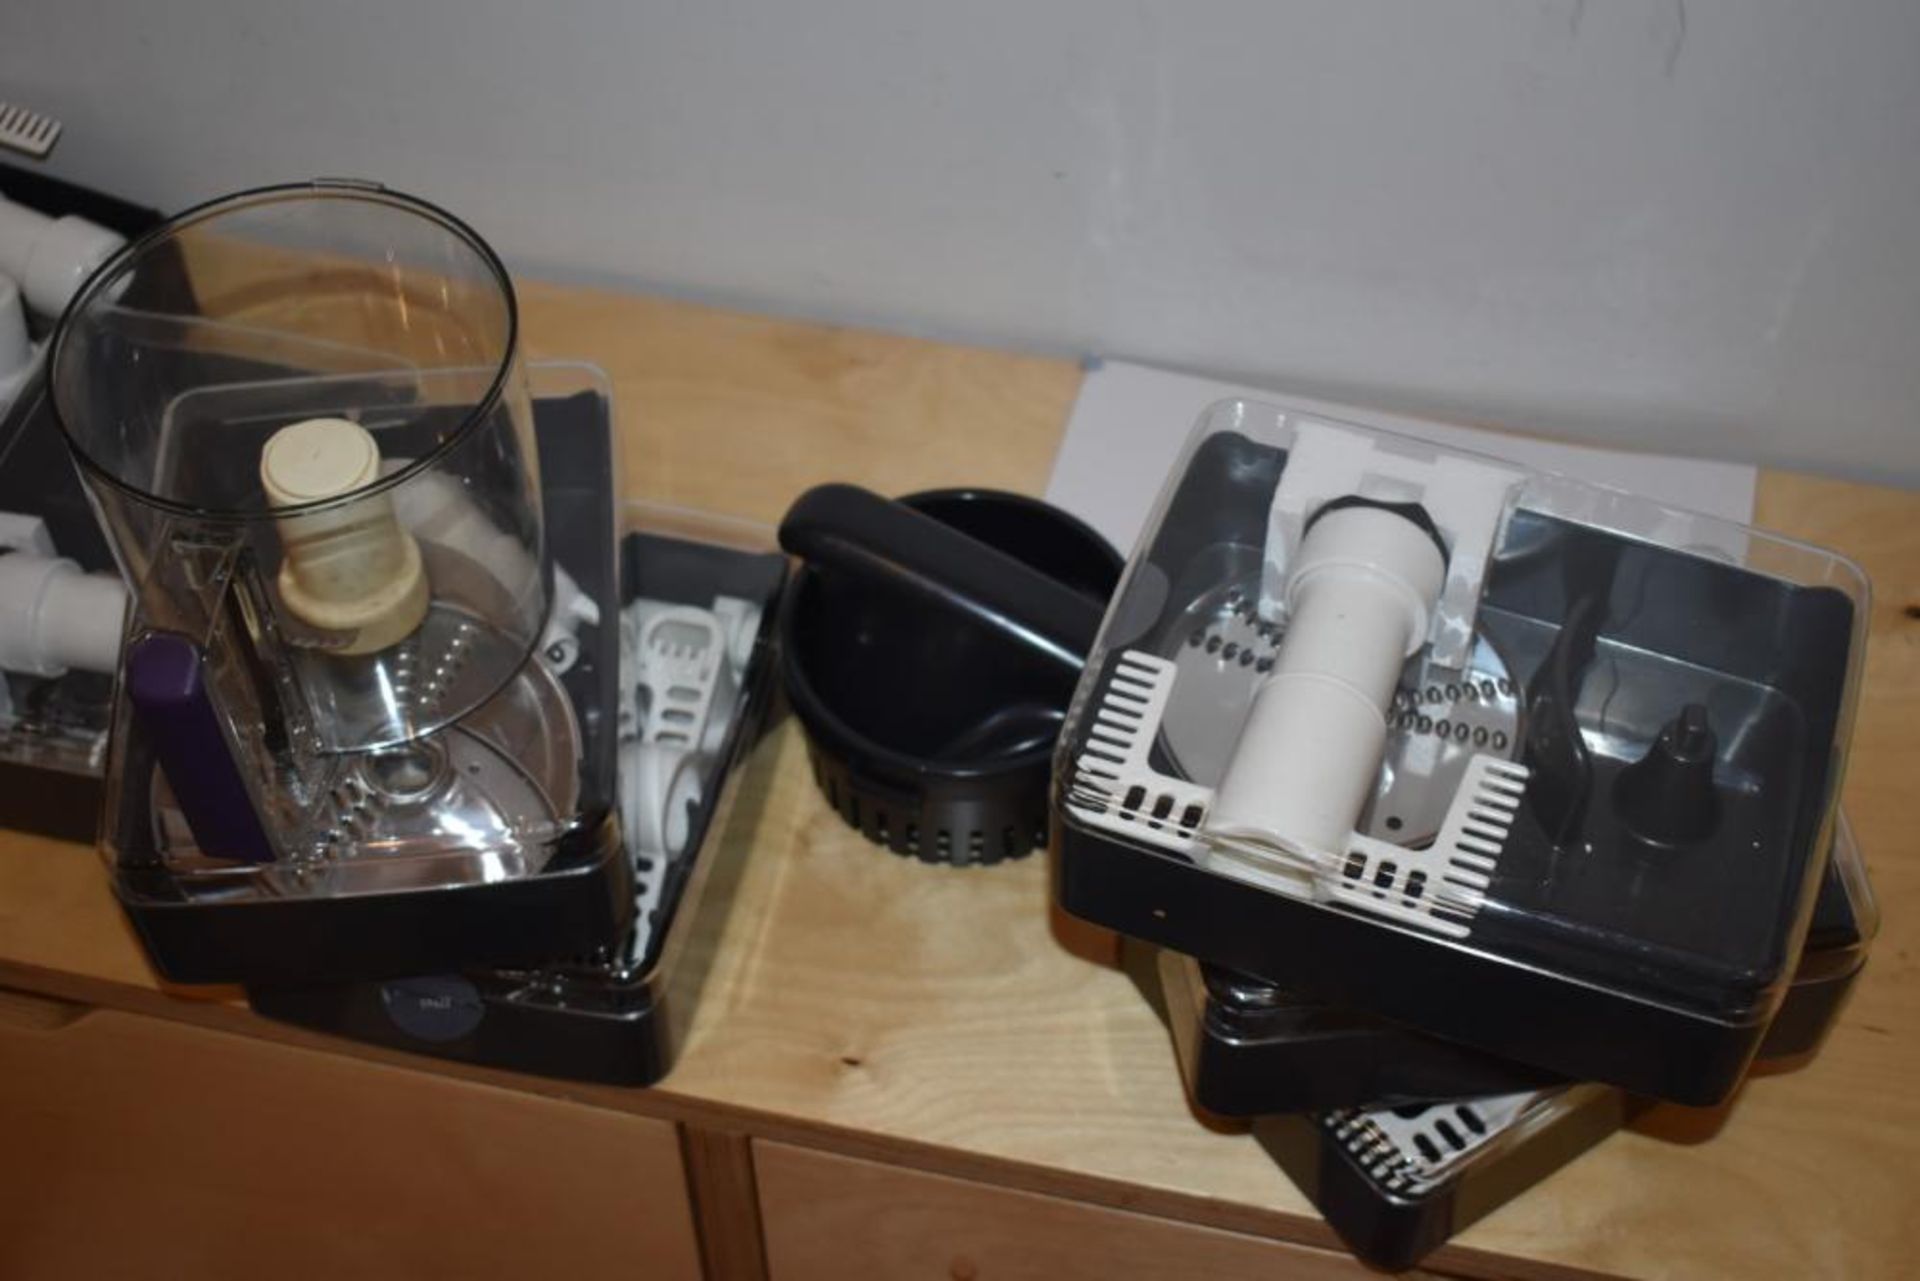 3 x Megamix Mini Plus Food Mixer With Accessories - Model 18240 - CL489 - Location: Putney, - Image 5 of 9